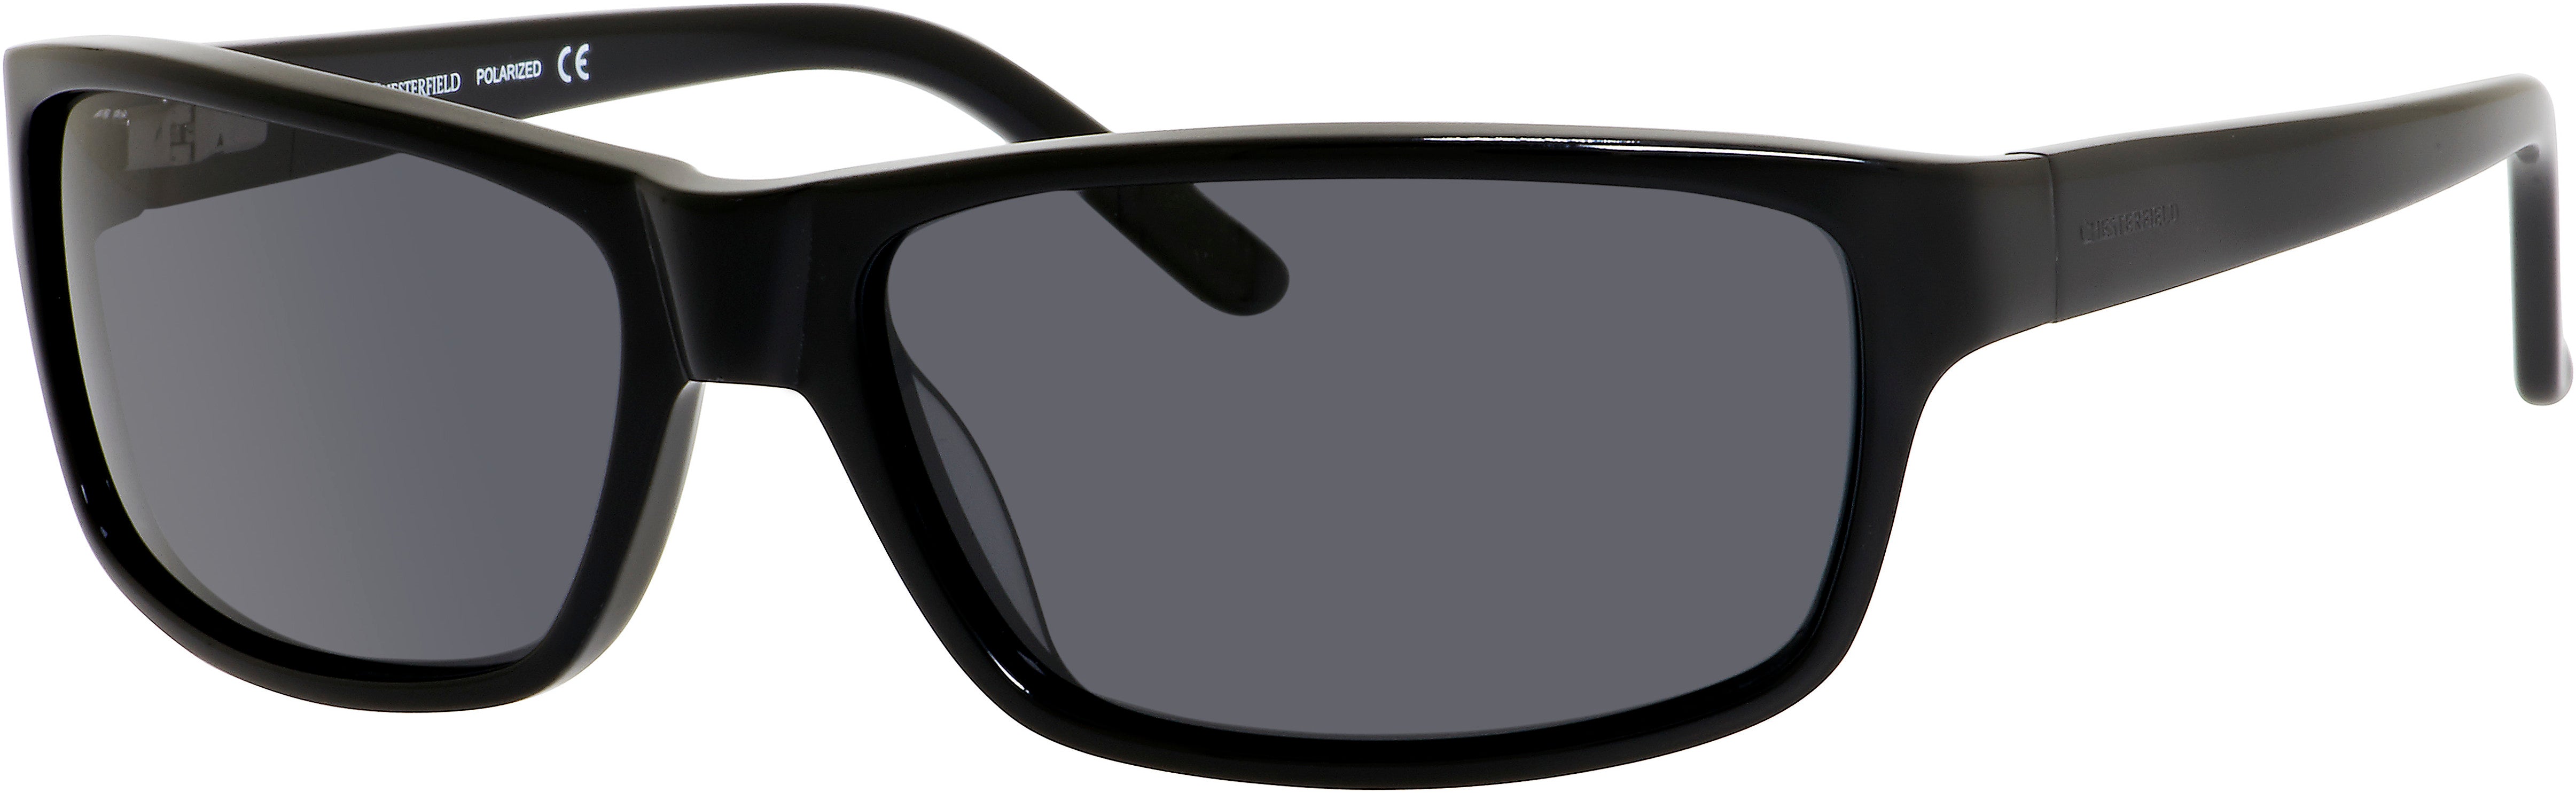 Chesterfield Husky/S Rectangular Shallow Sunglasses 807P-807P  Black (Y2 Gray Polarized)